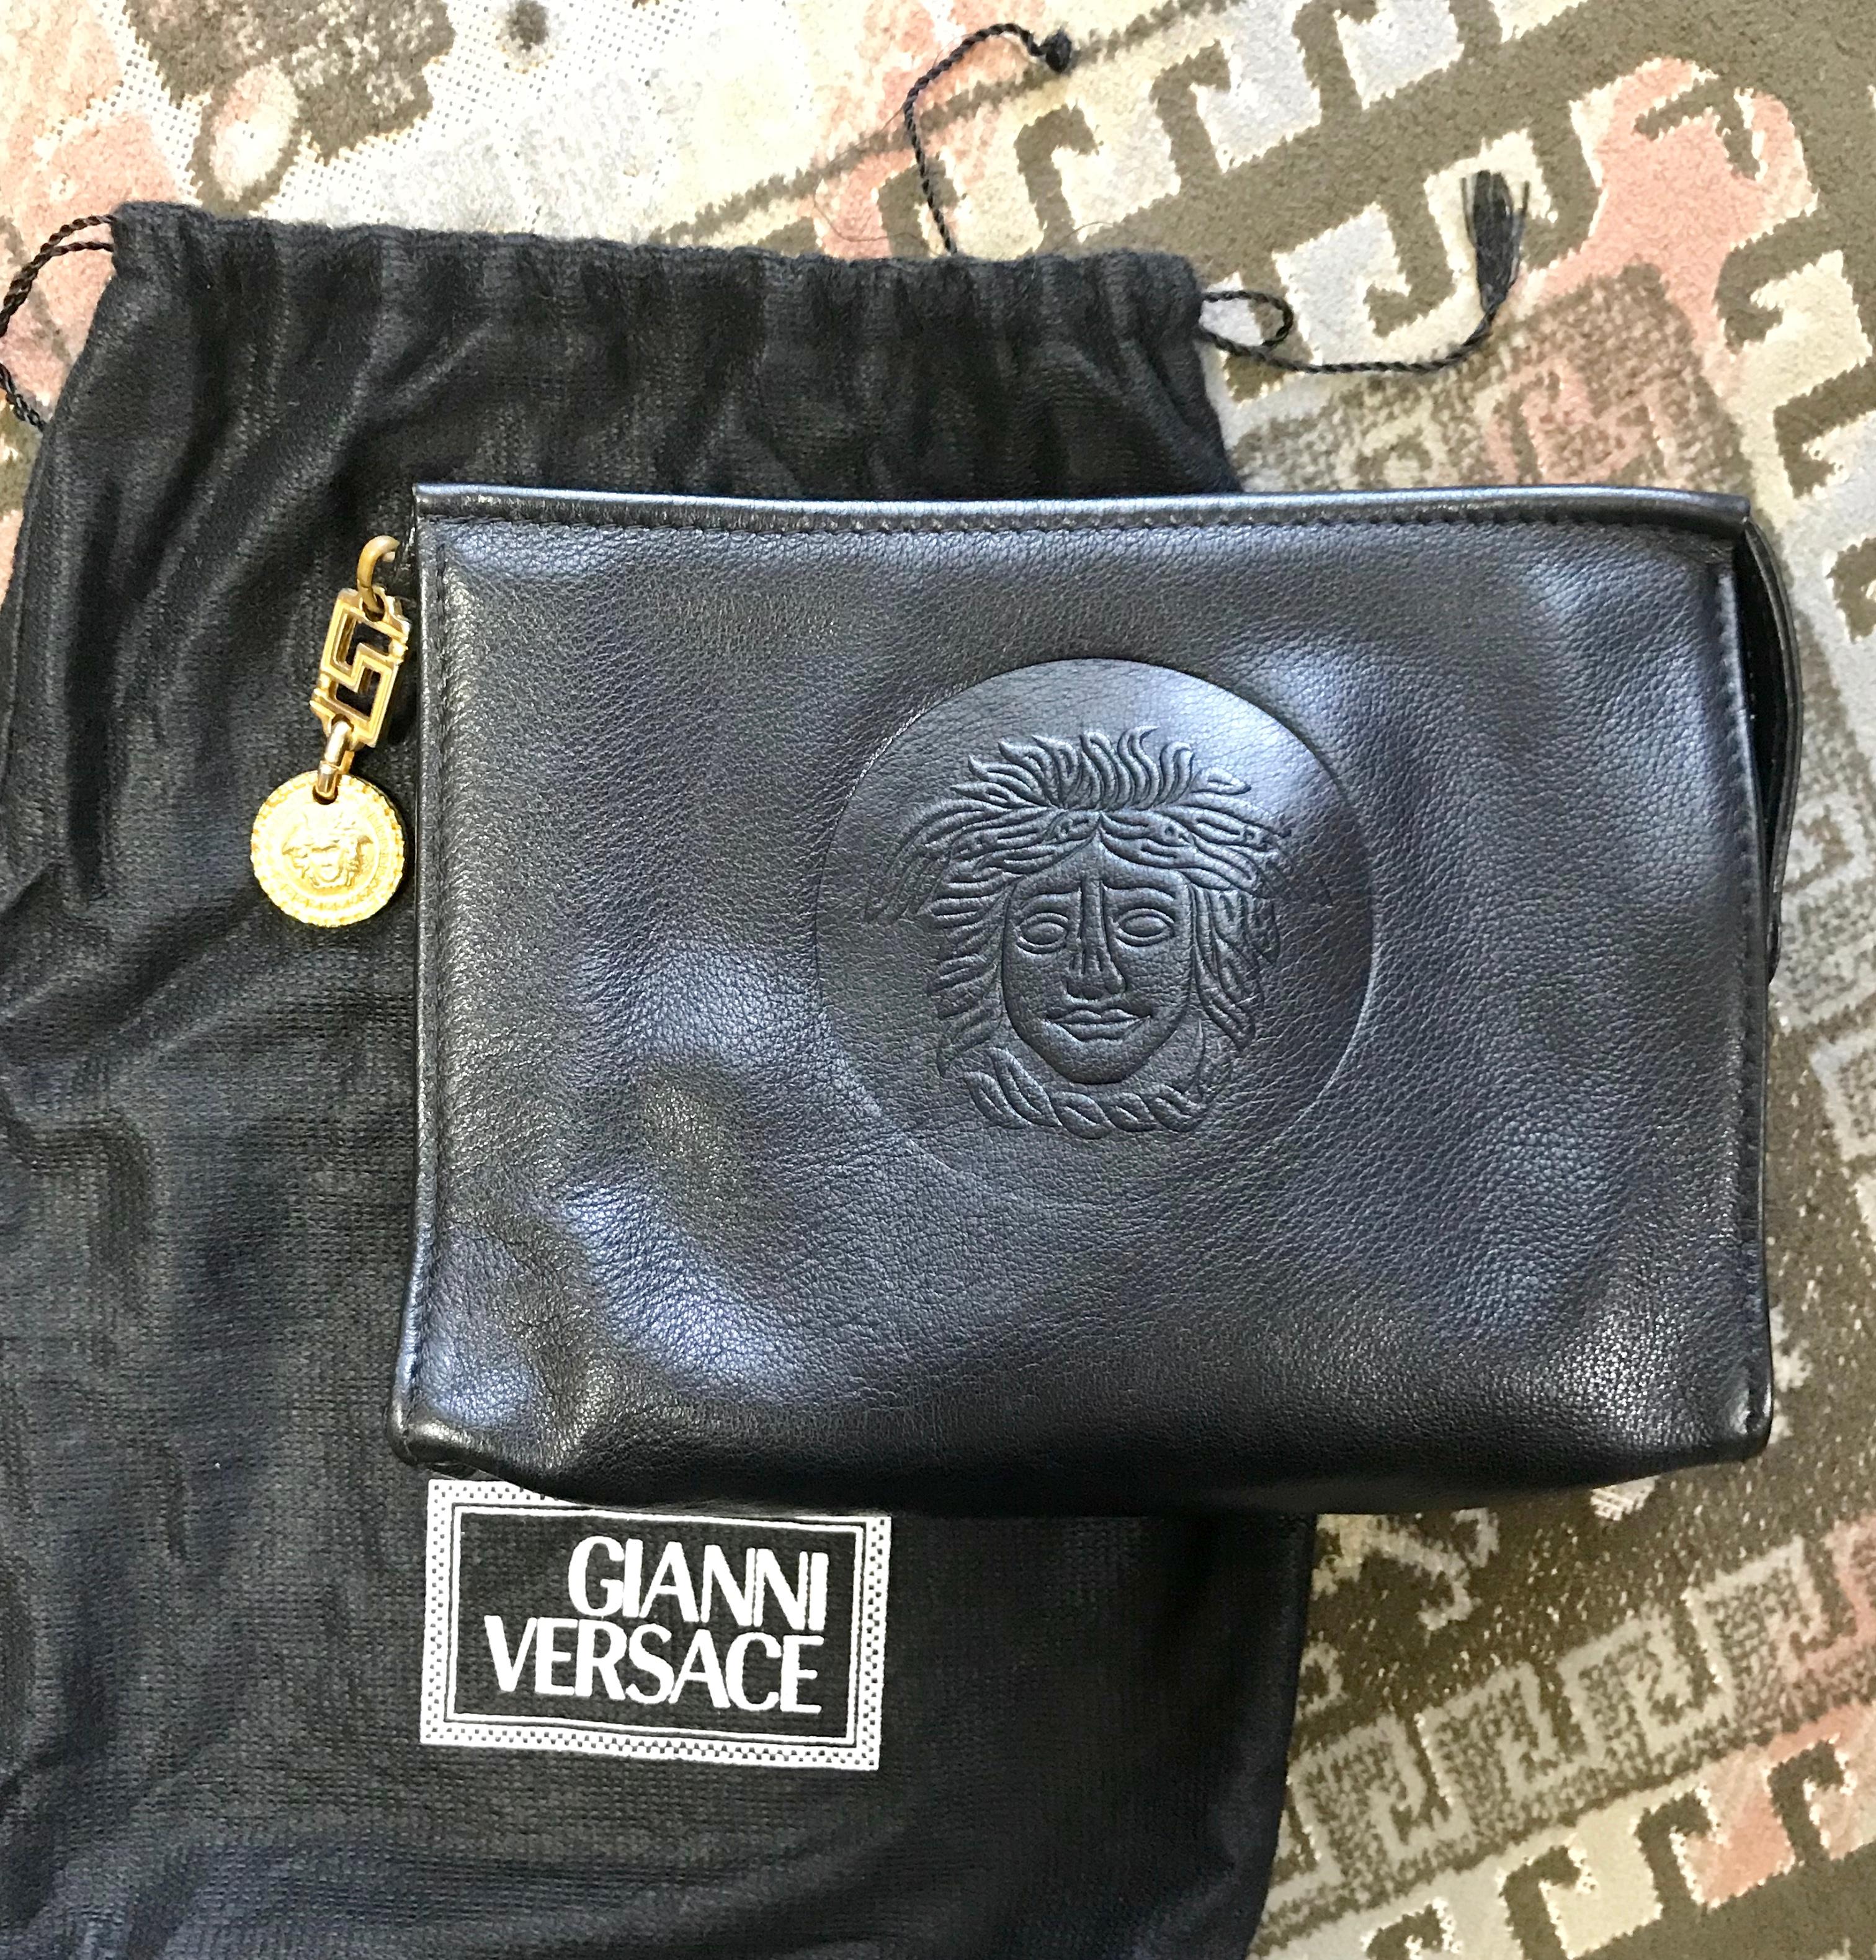 Vintage Gianni Versace black leather clutch purse, pouch, case bag with medusa. 2